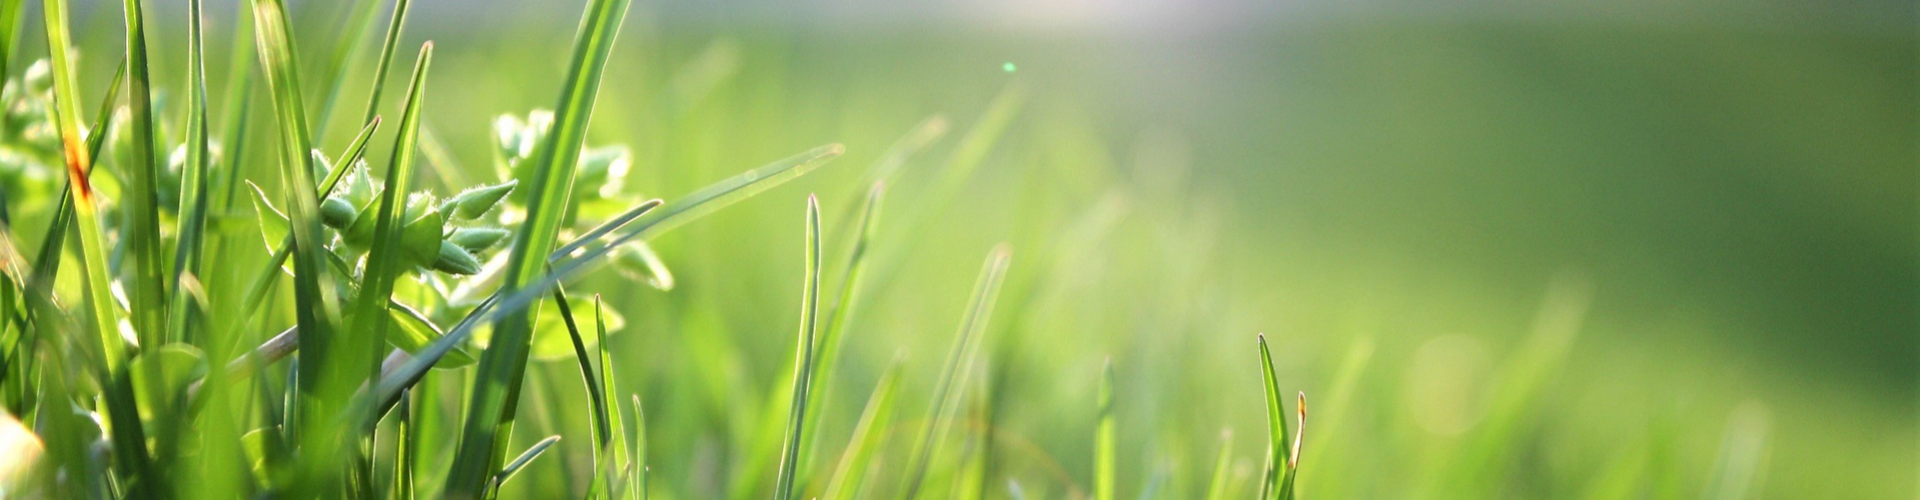 beautiful macro shot of some grass